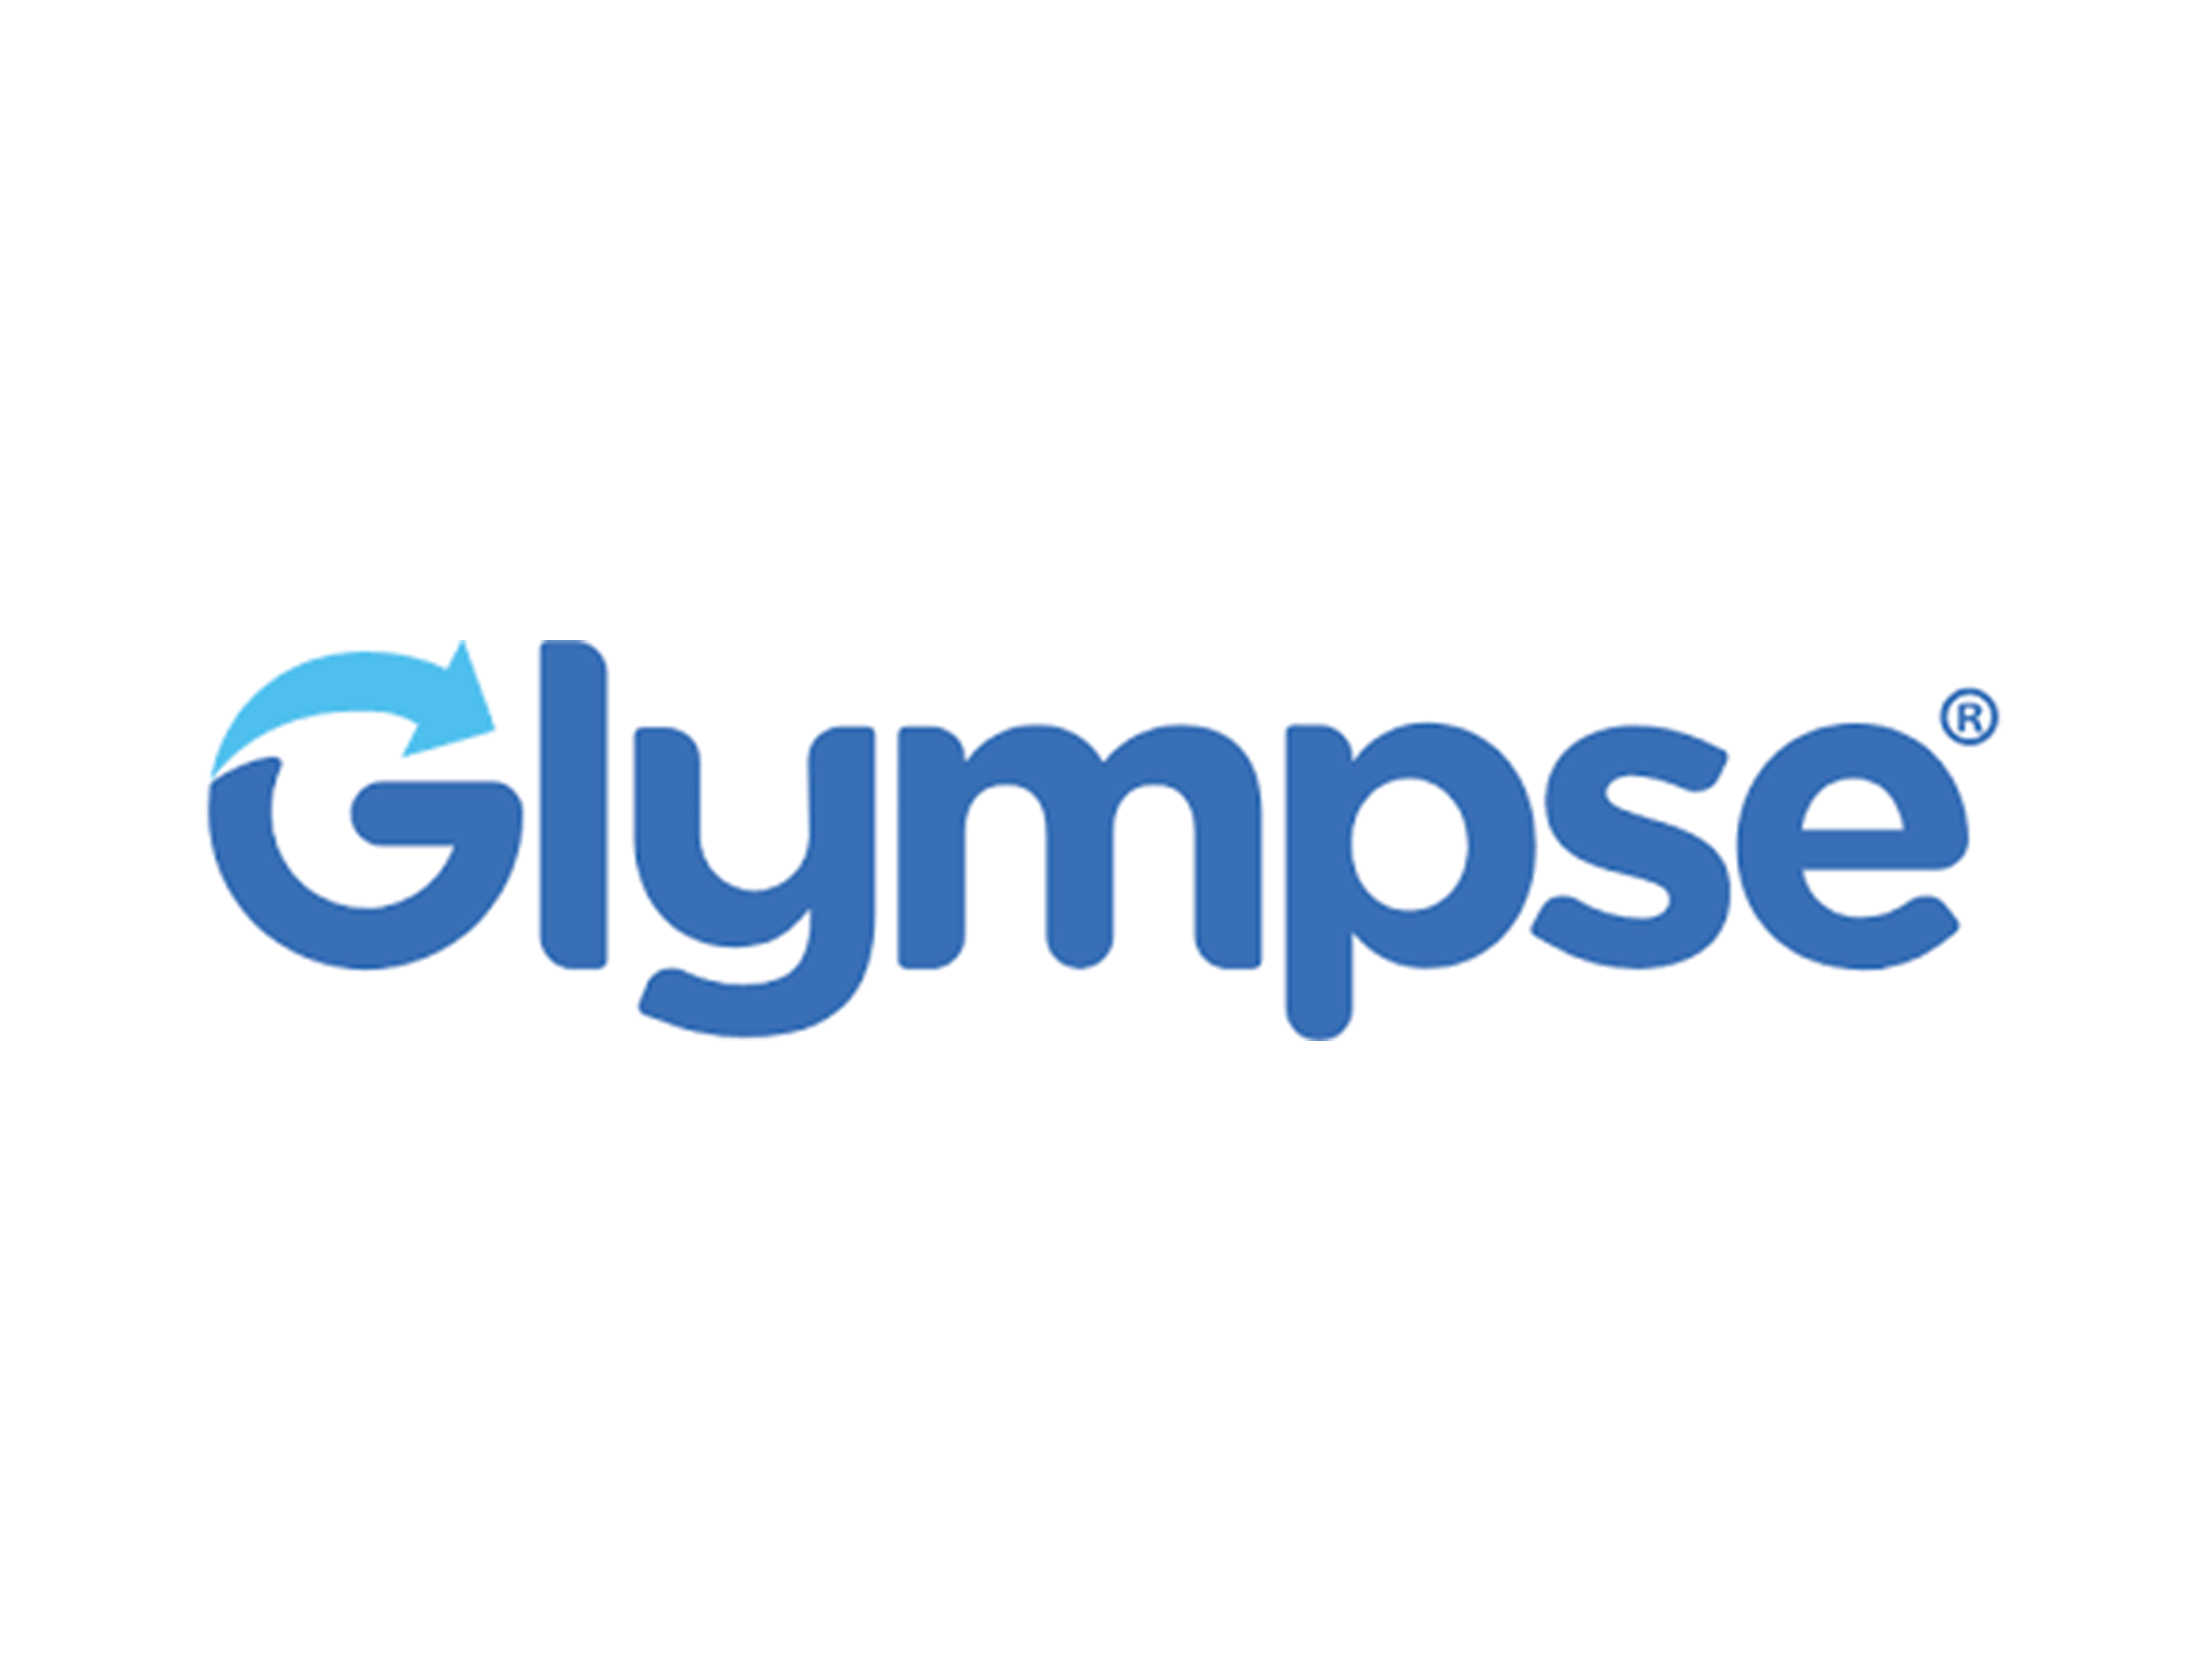 Glympse Logo